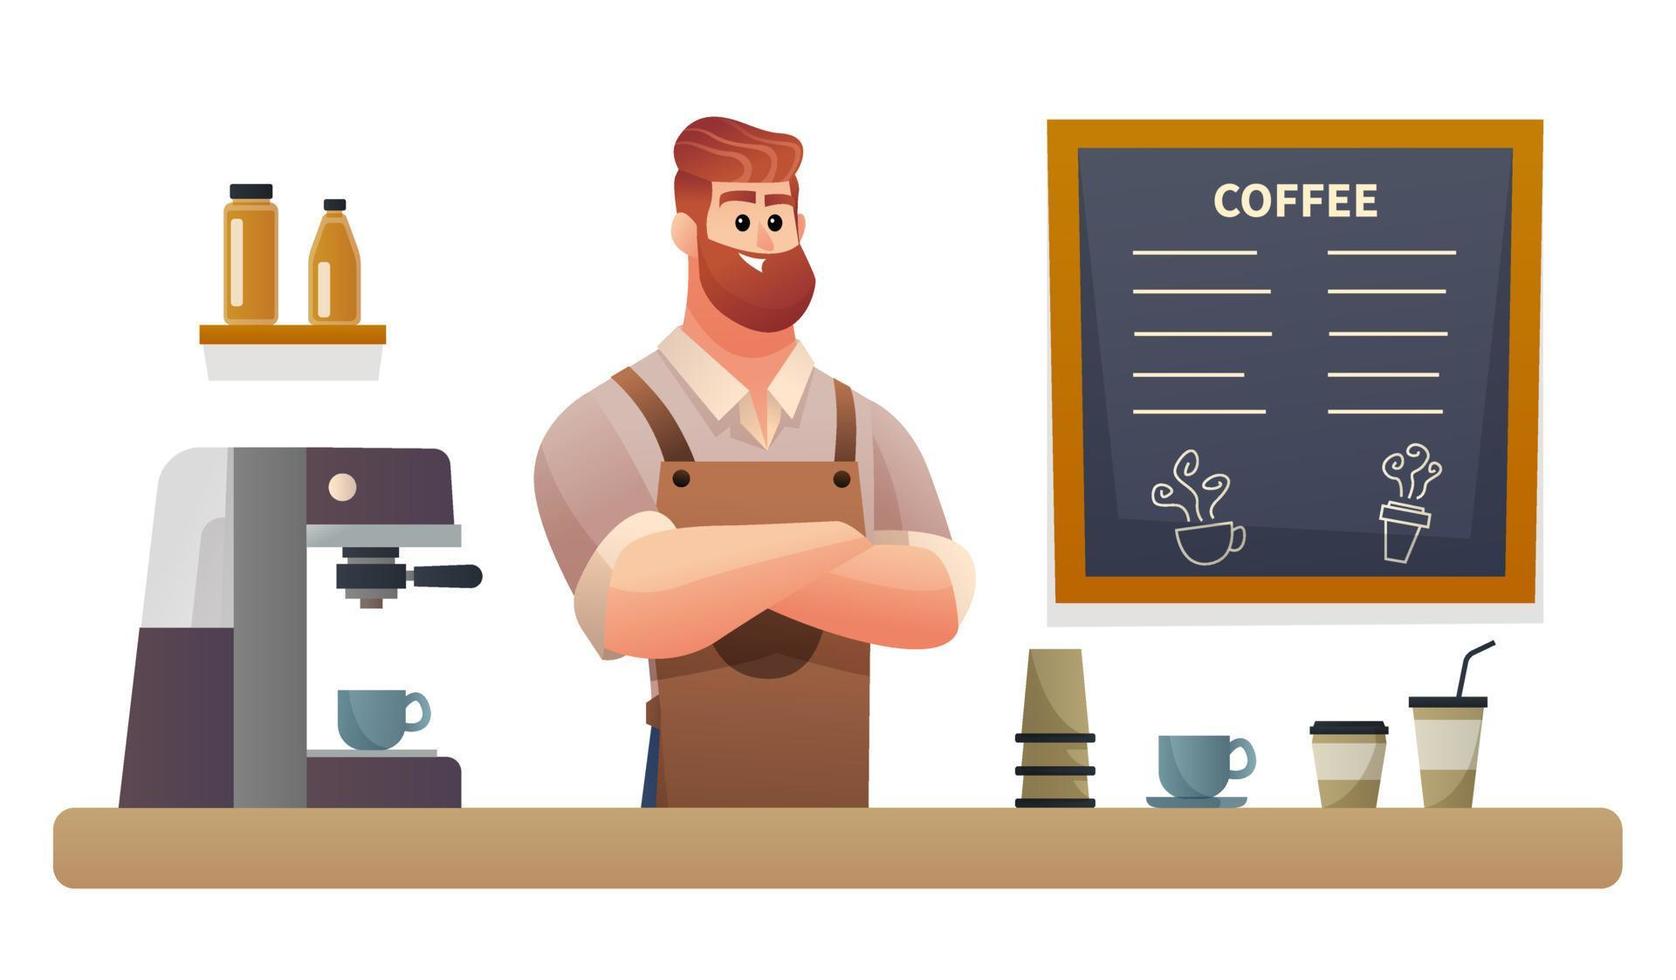 Barista character at coffee shop counter illustration vector